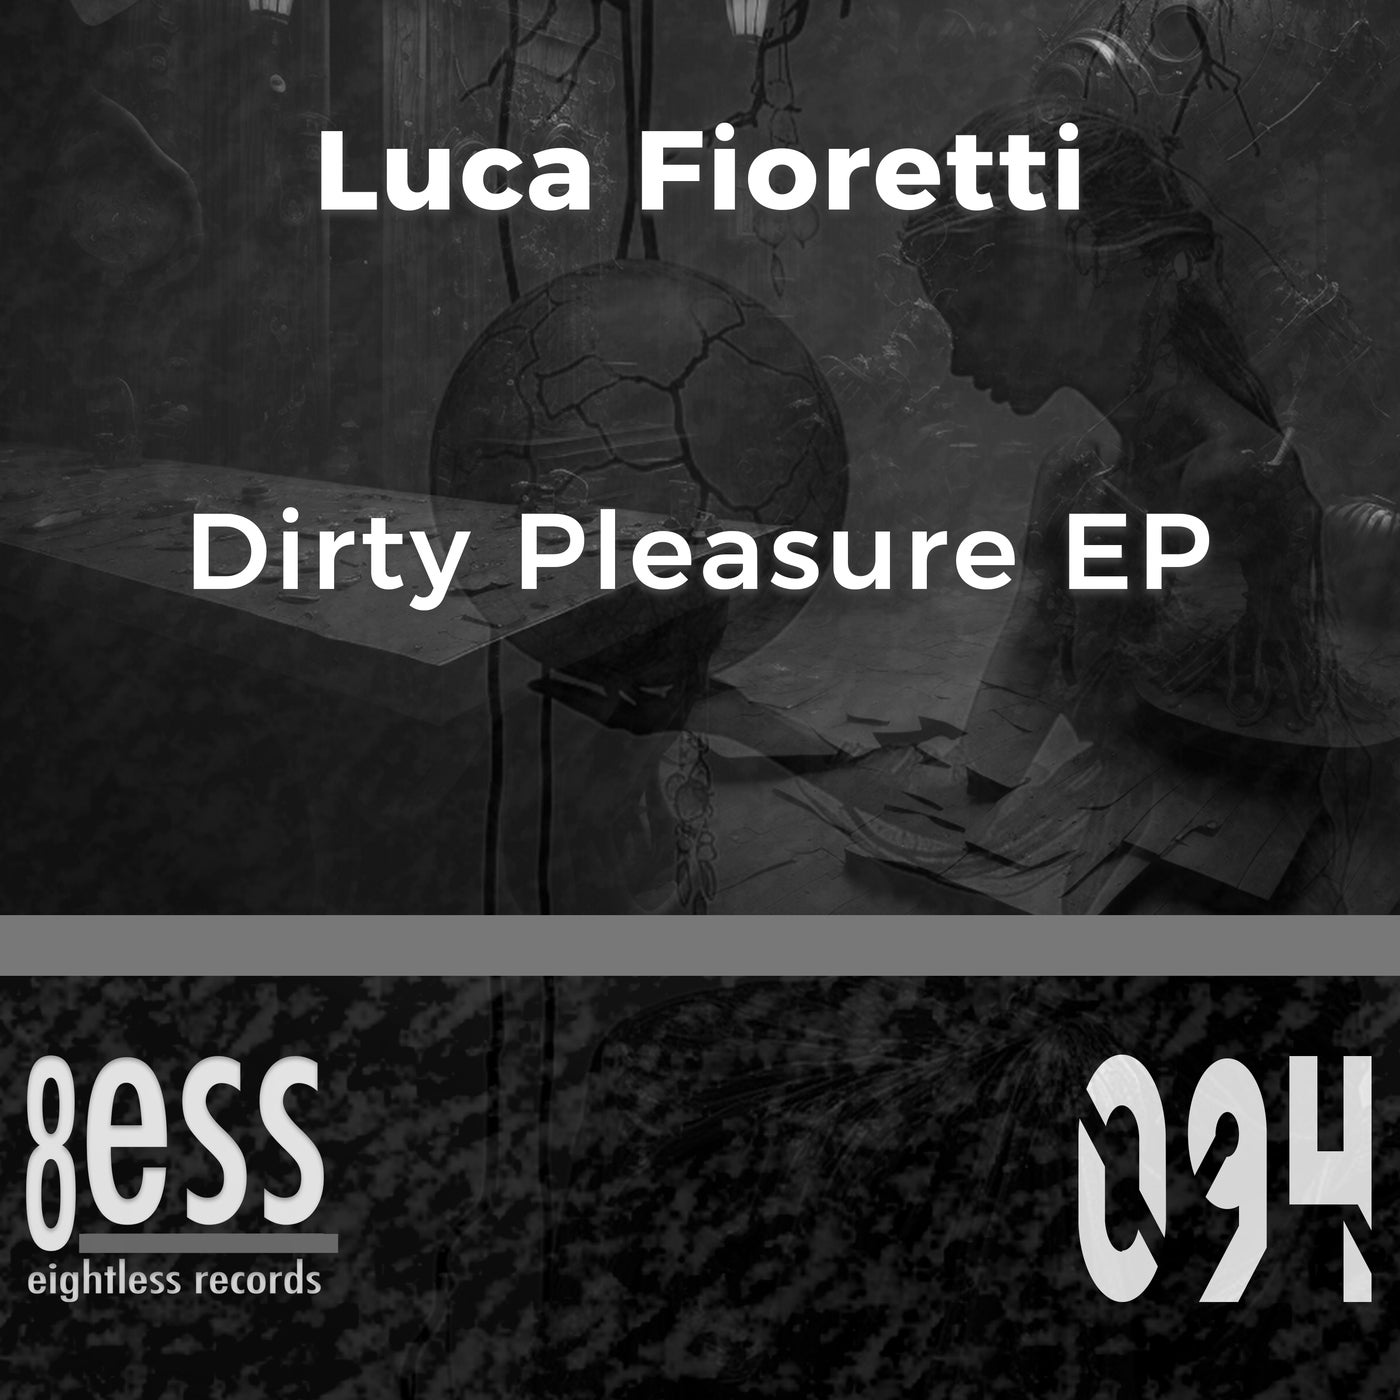 Dirty Pleasure EP